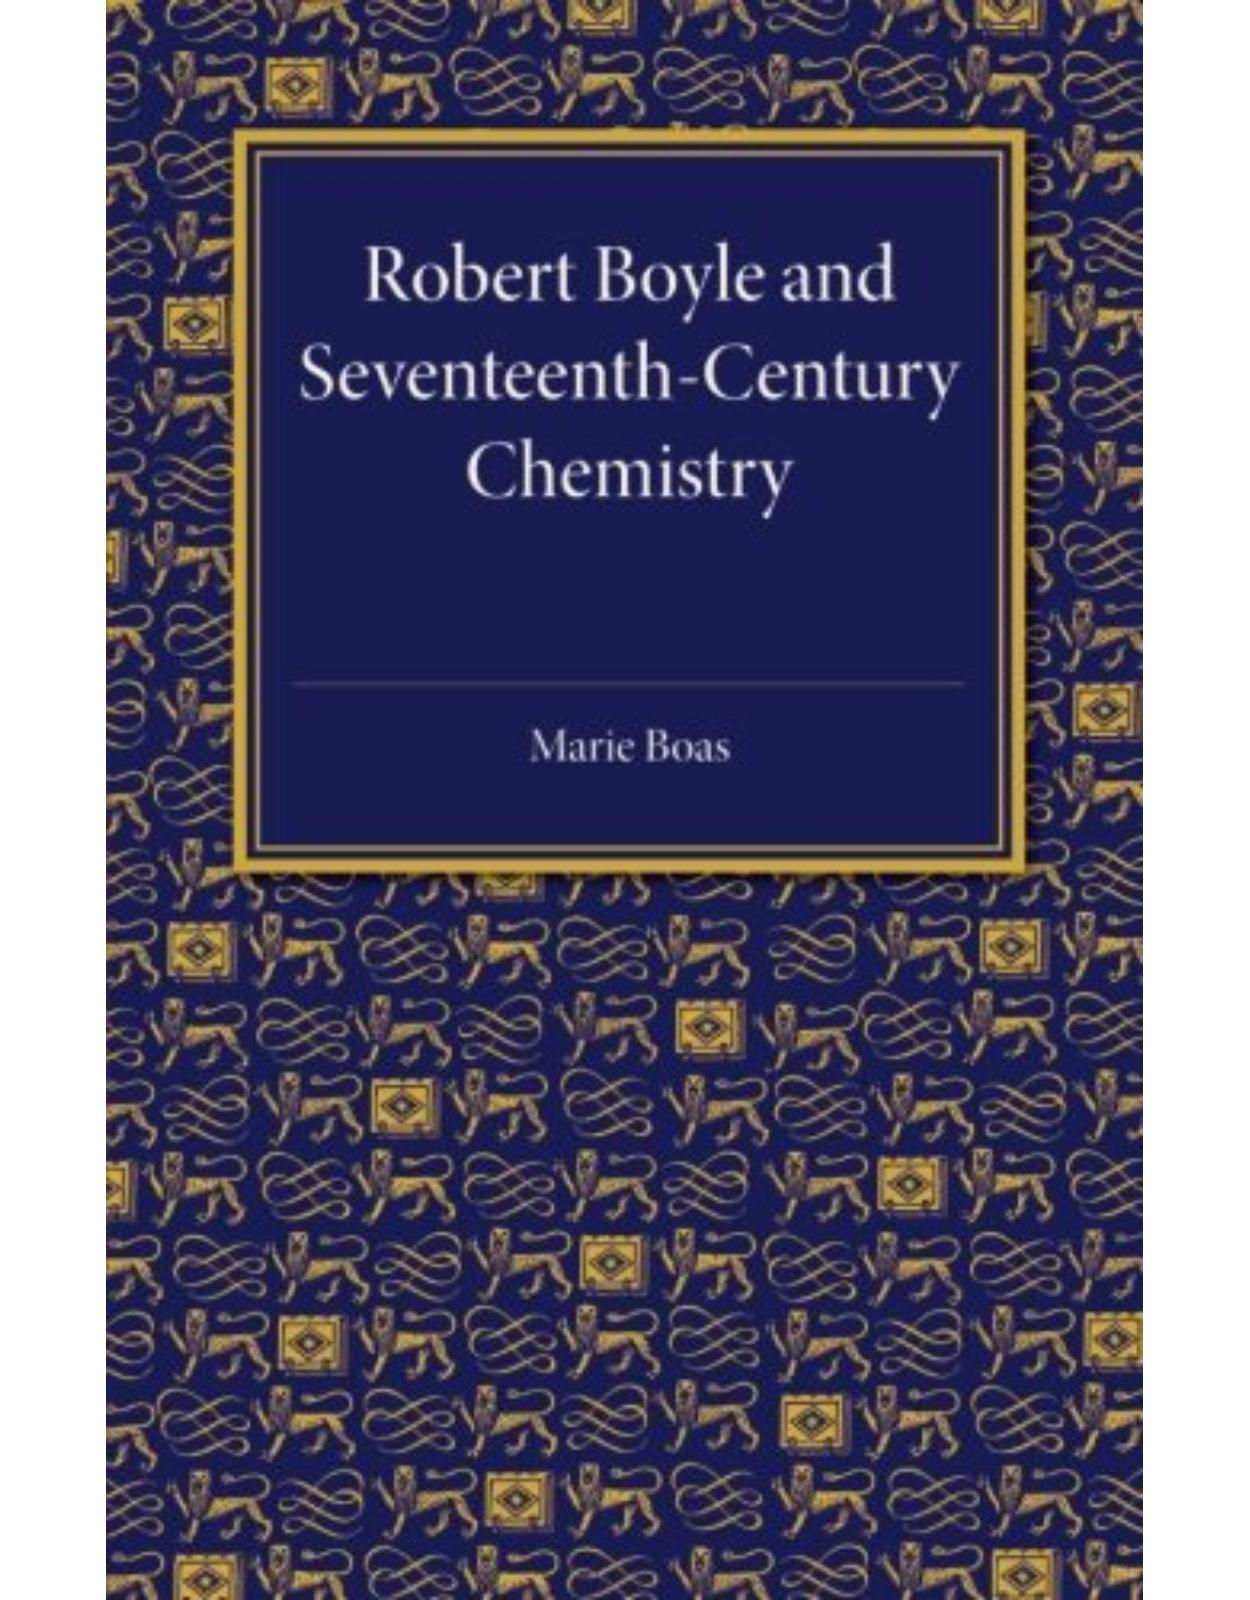 Robert Boyle and Seventeenth-Century Chemistry